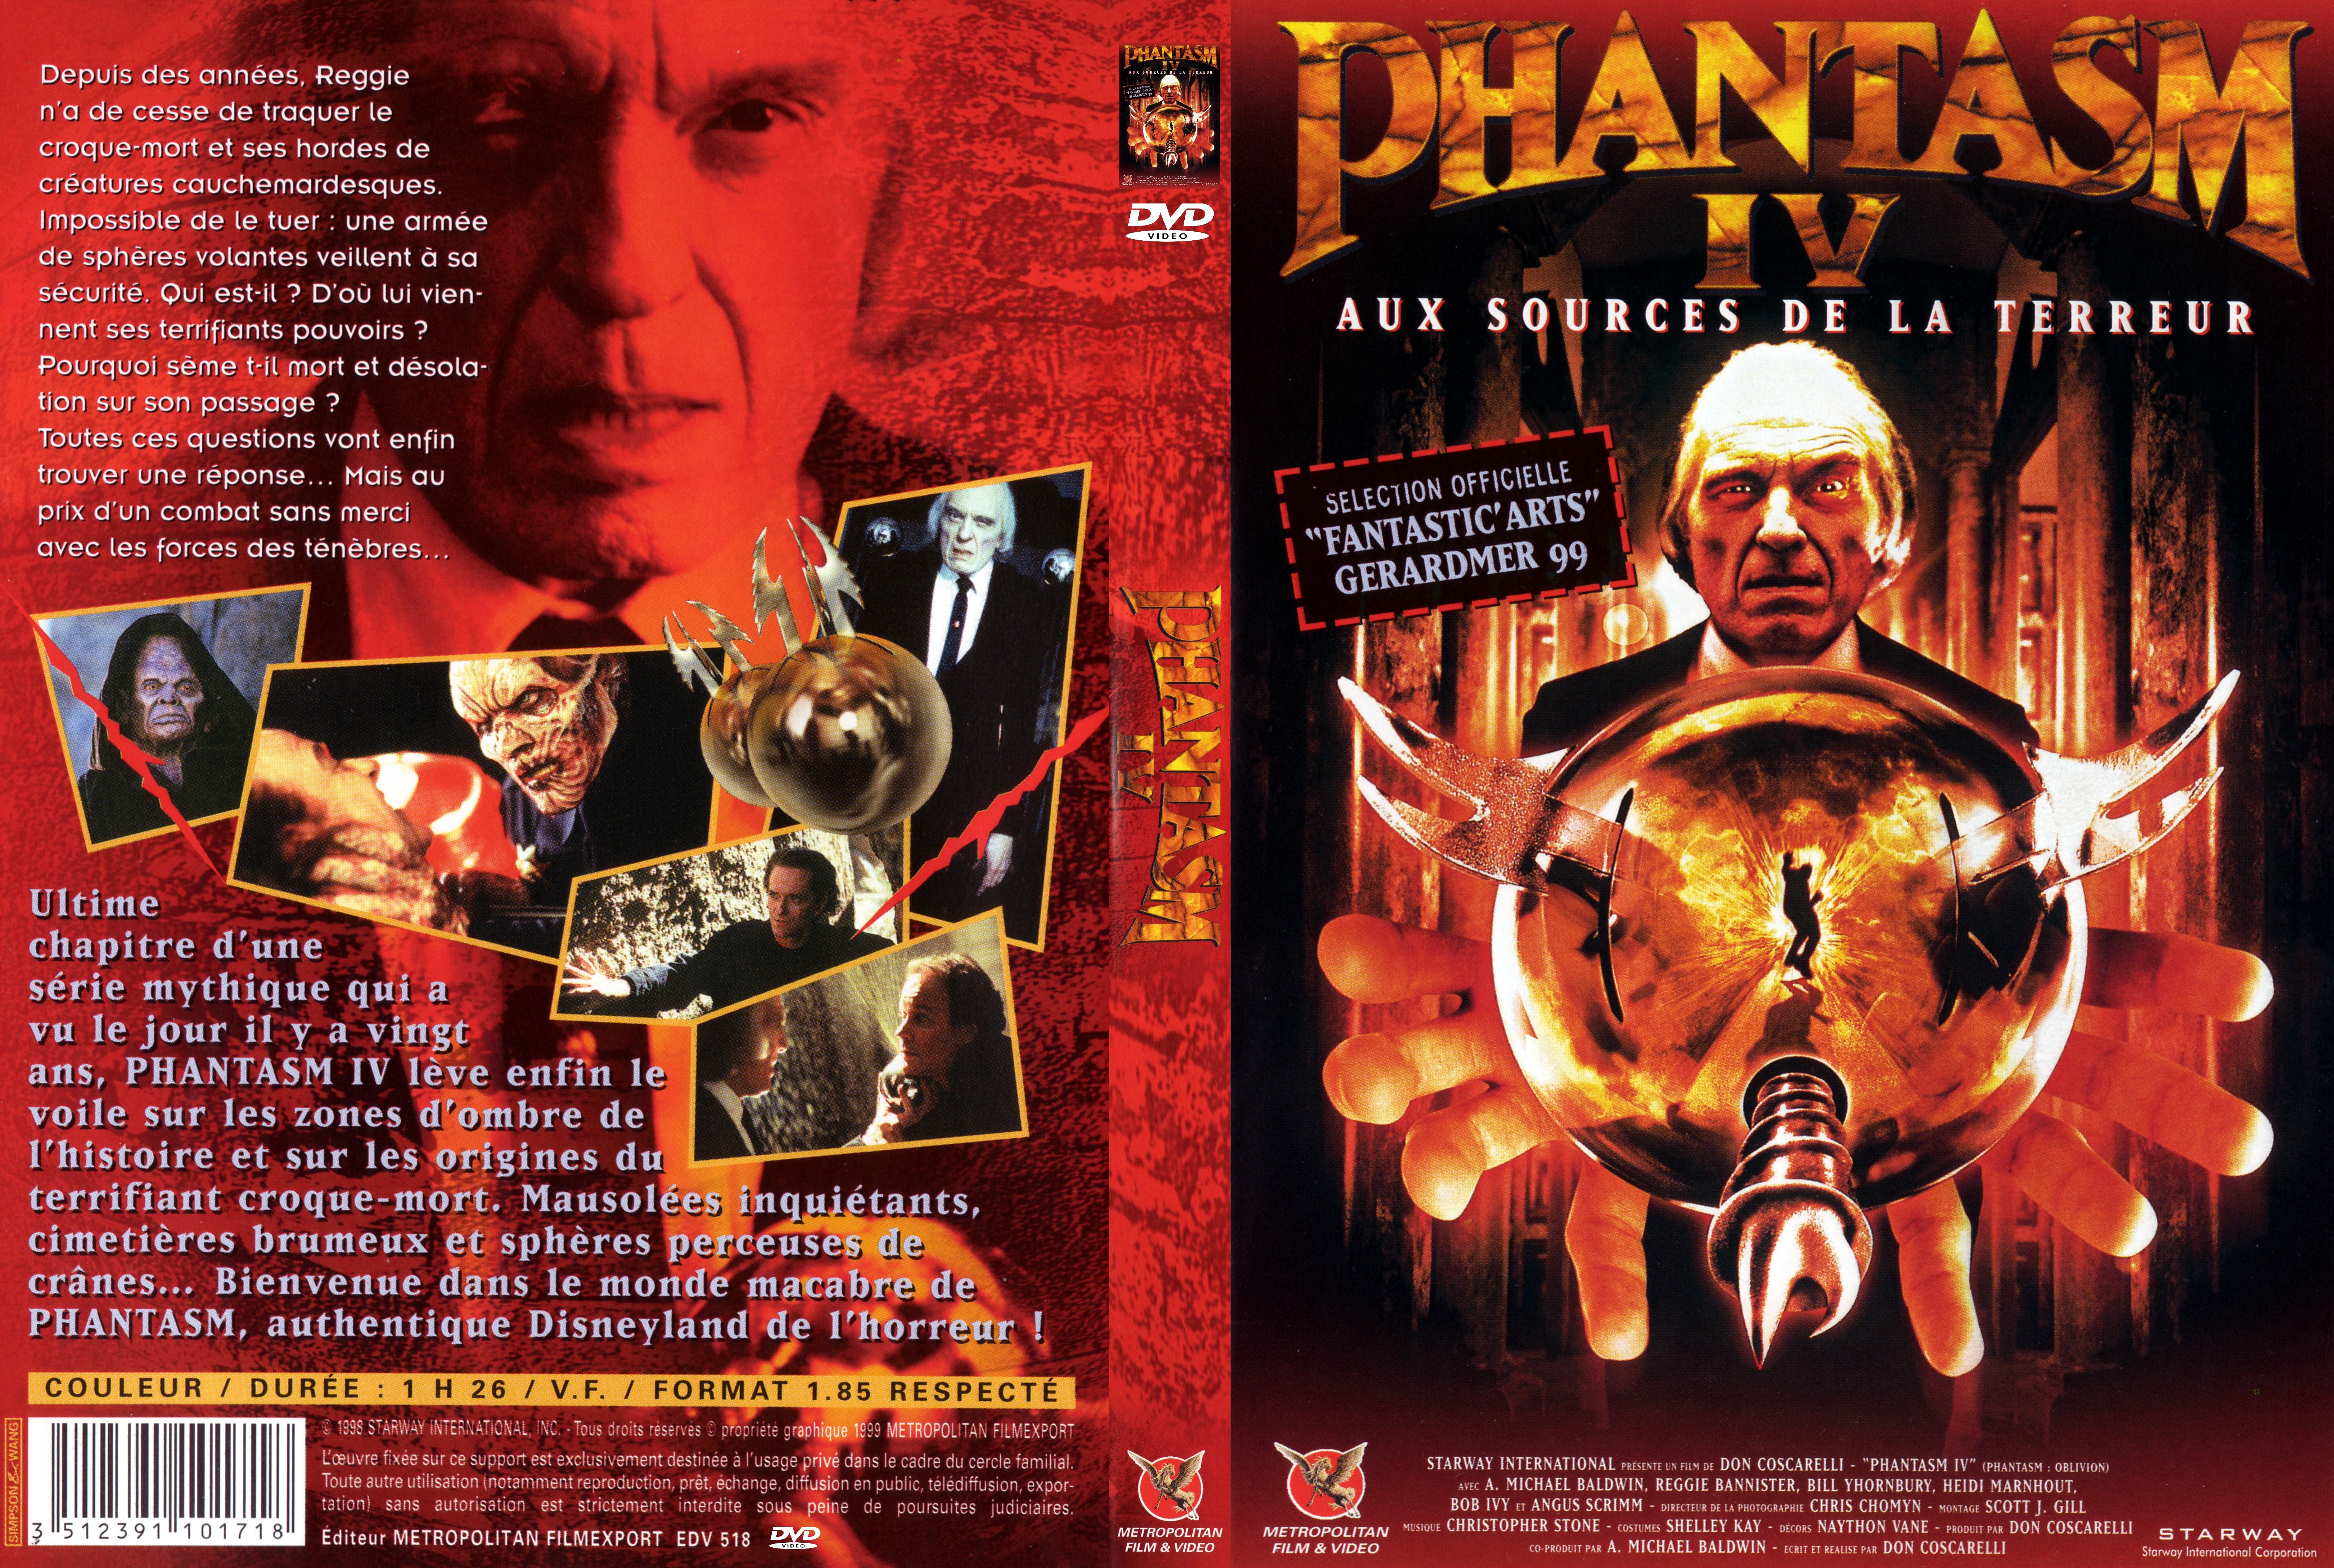 Jaquette DVD Phantasm 4 custom